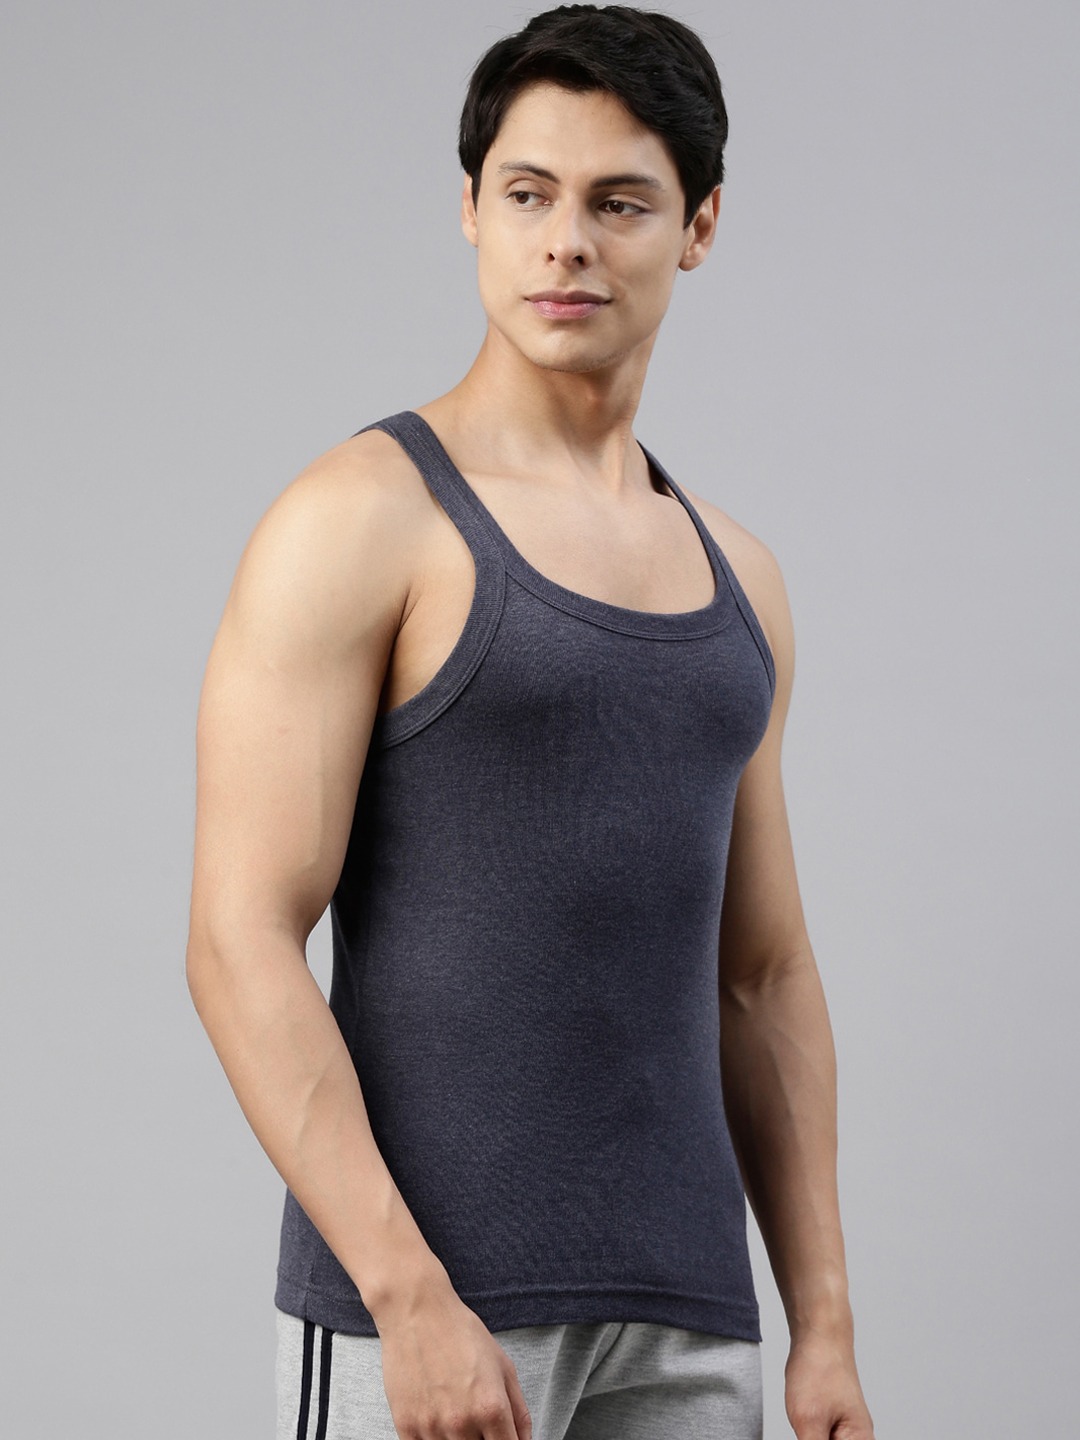 Clothing Innerwear Vests | DIXCY SCOTT Men Pack of 2 Solid Cotton Innerwear Gym Vests - EC97146